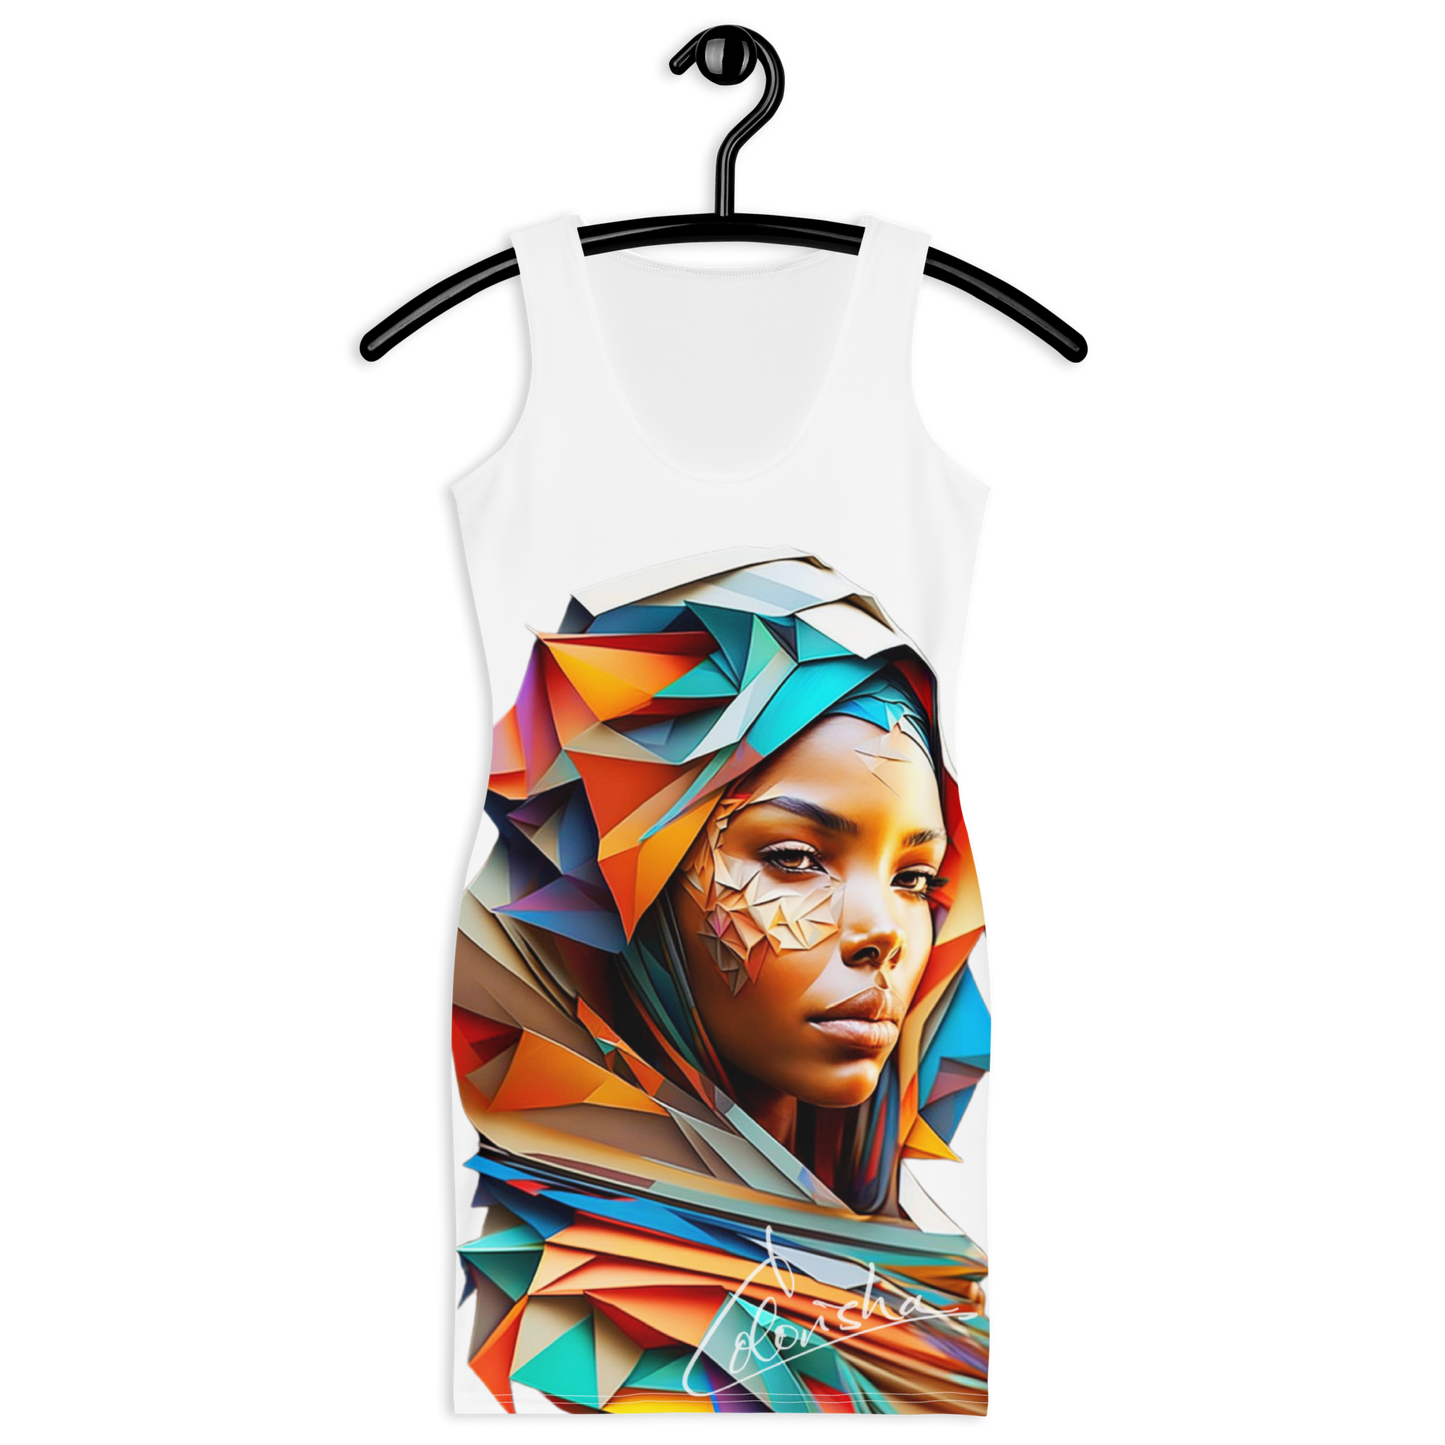 Shayma - Robe - Modèle n°10